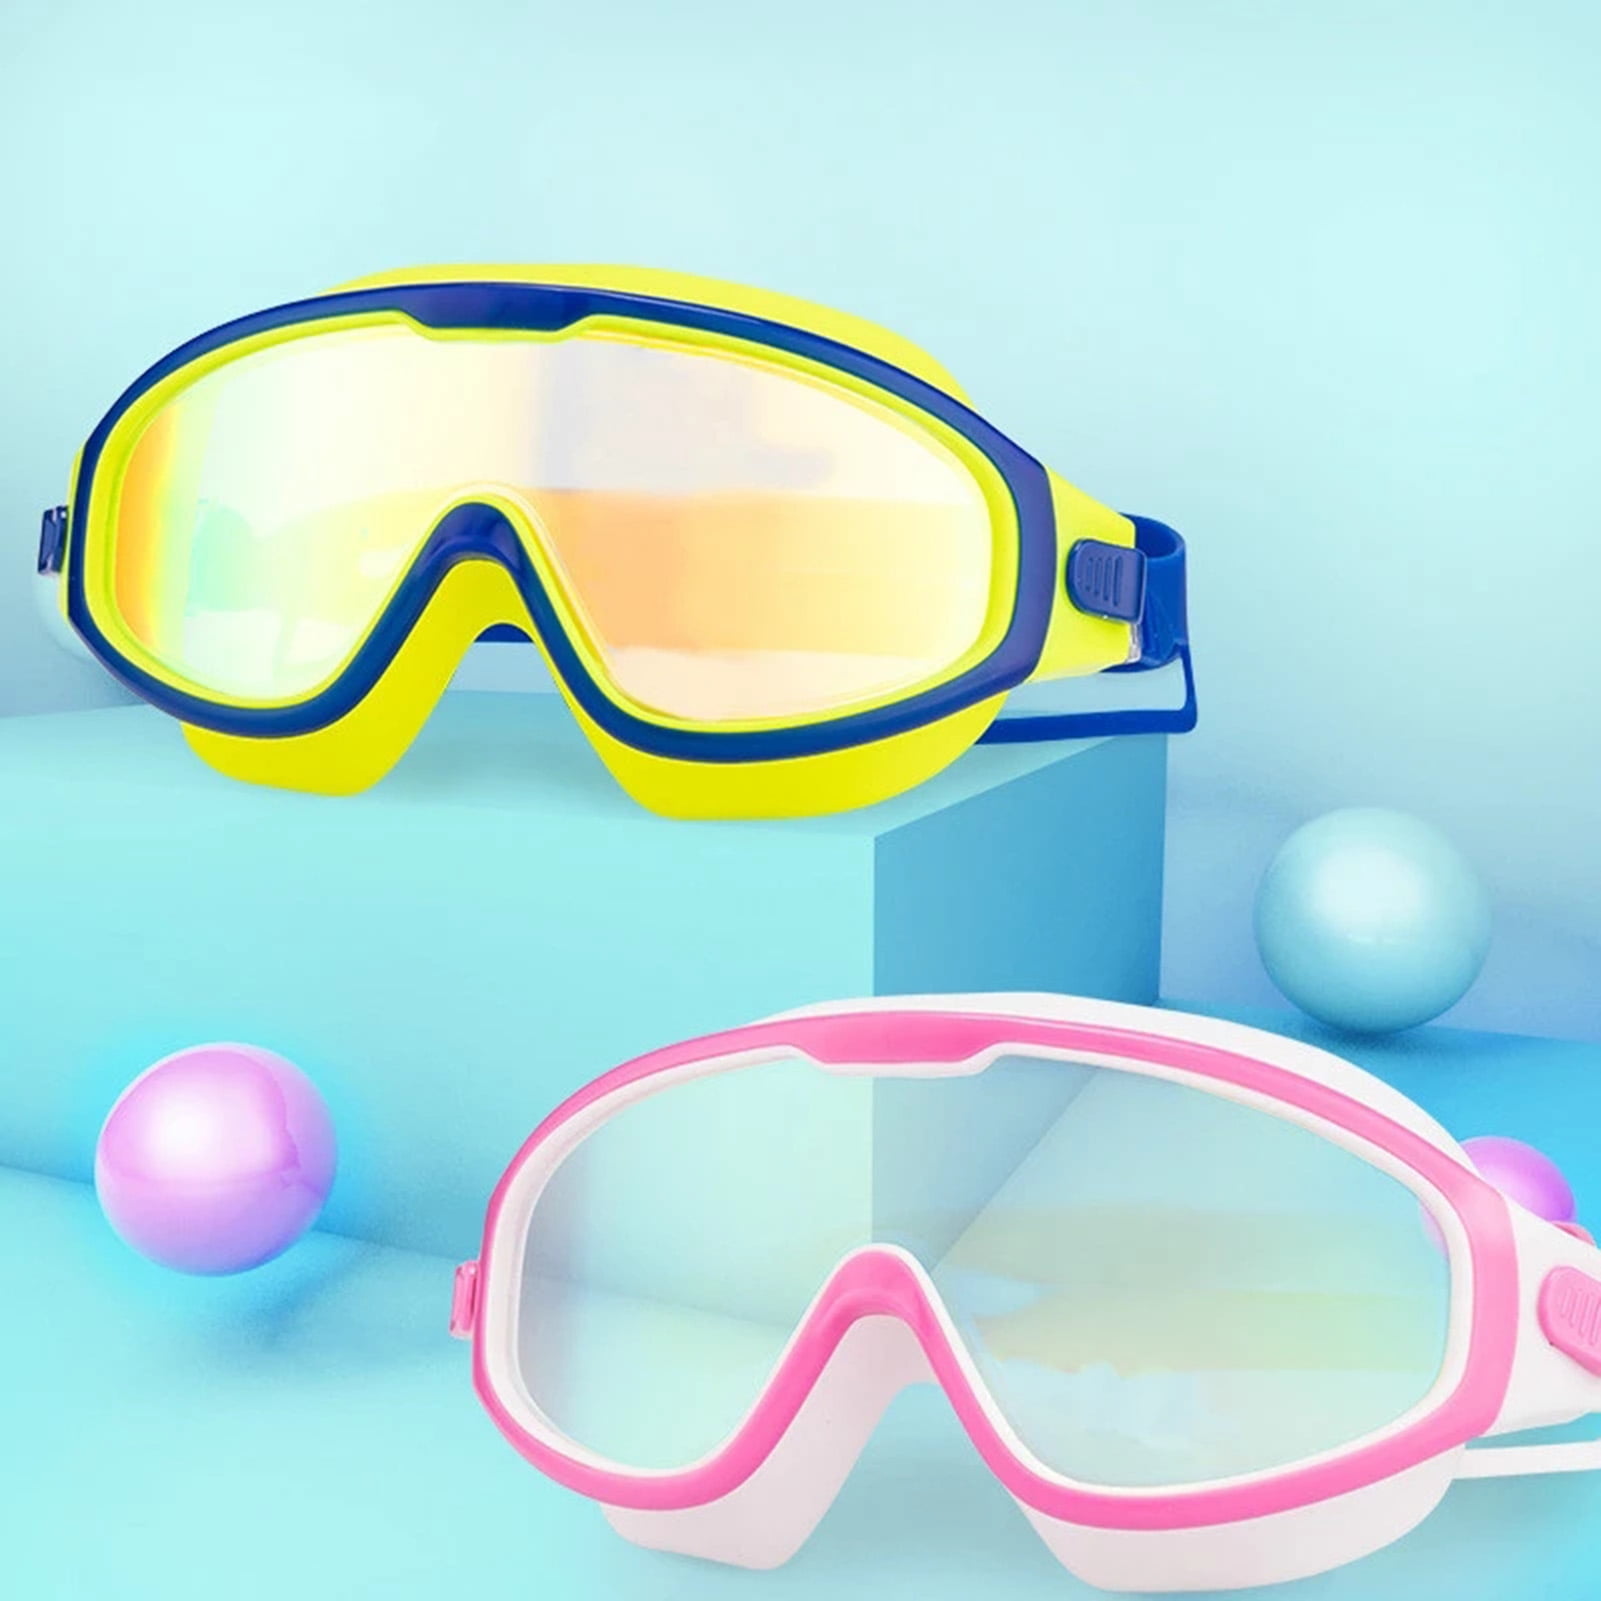 Adjustable Anti-Fog Swimming Goggles Glasses Earbuds Nose Clip Adult Kids UK 